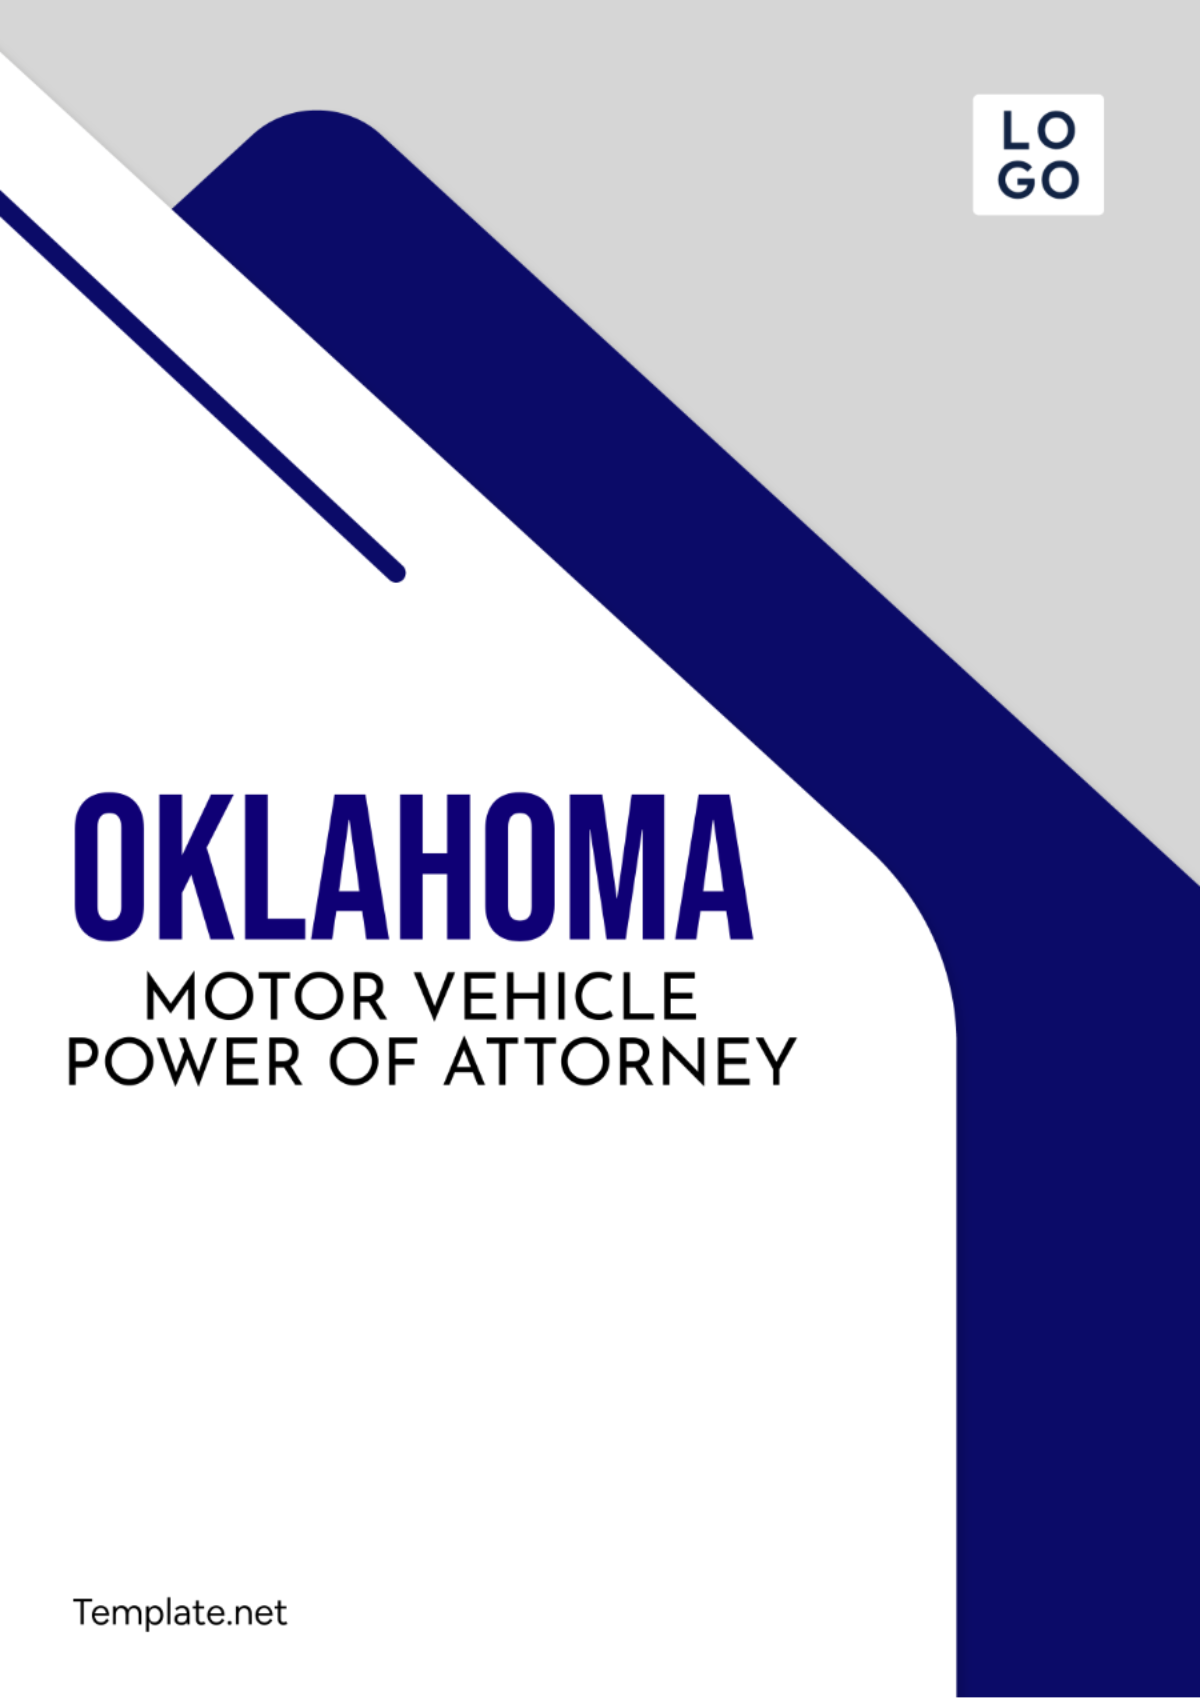 Oklahoma Motor Vehicle Power of Attorney Template